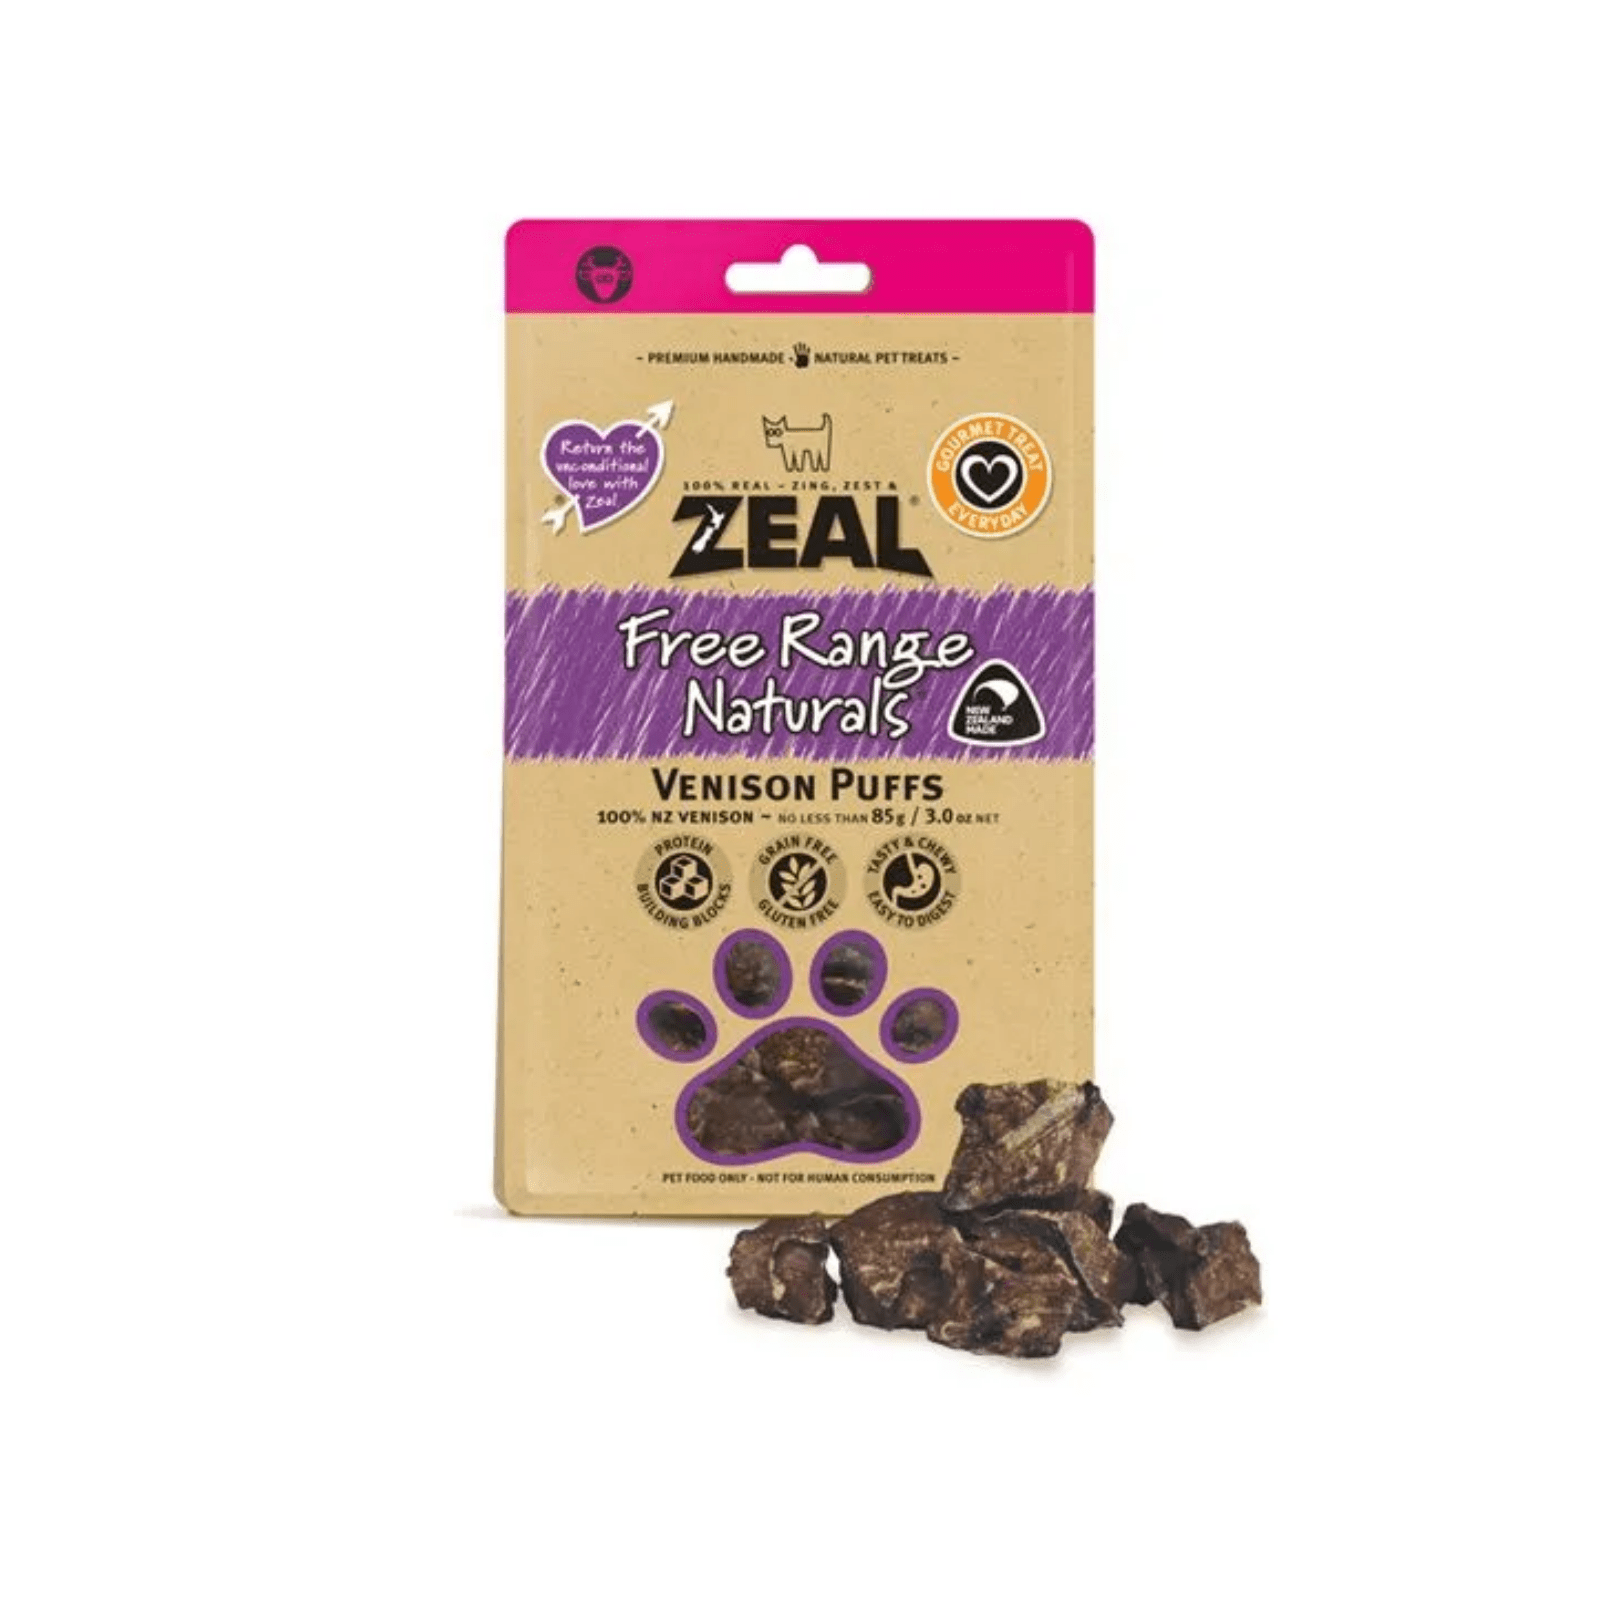 Zeal Dog Treats, Free Range Naturals Venison Puffs.